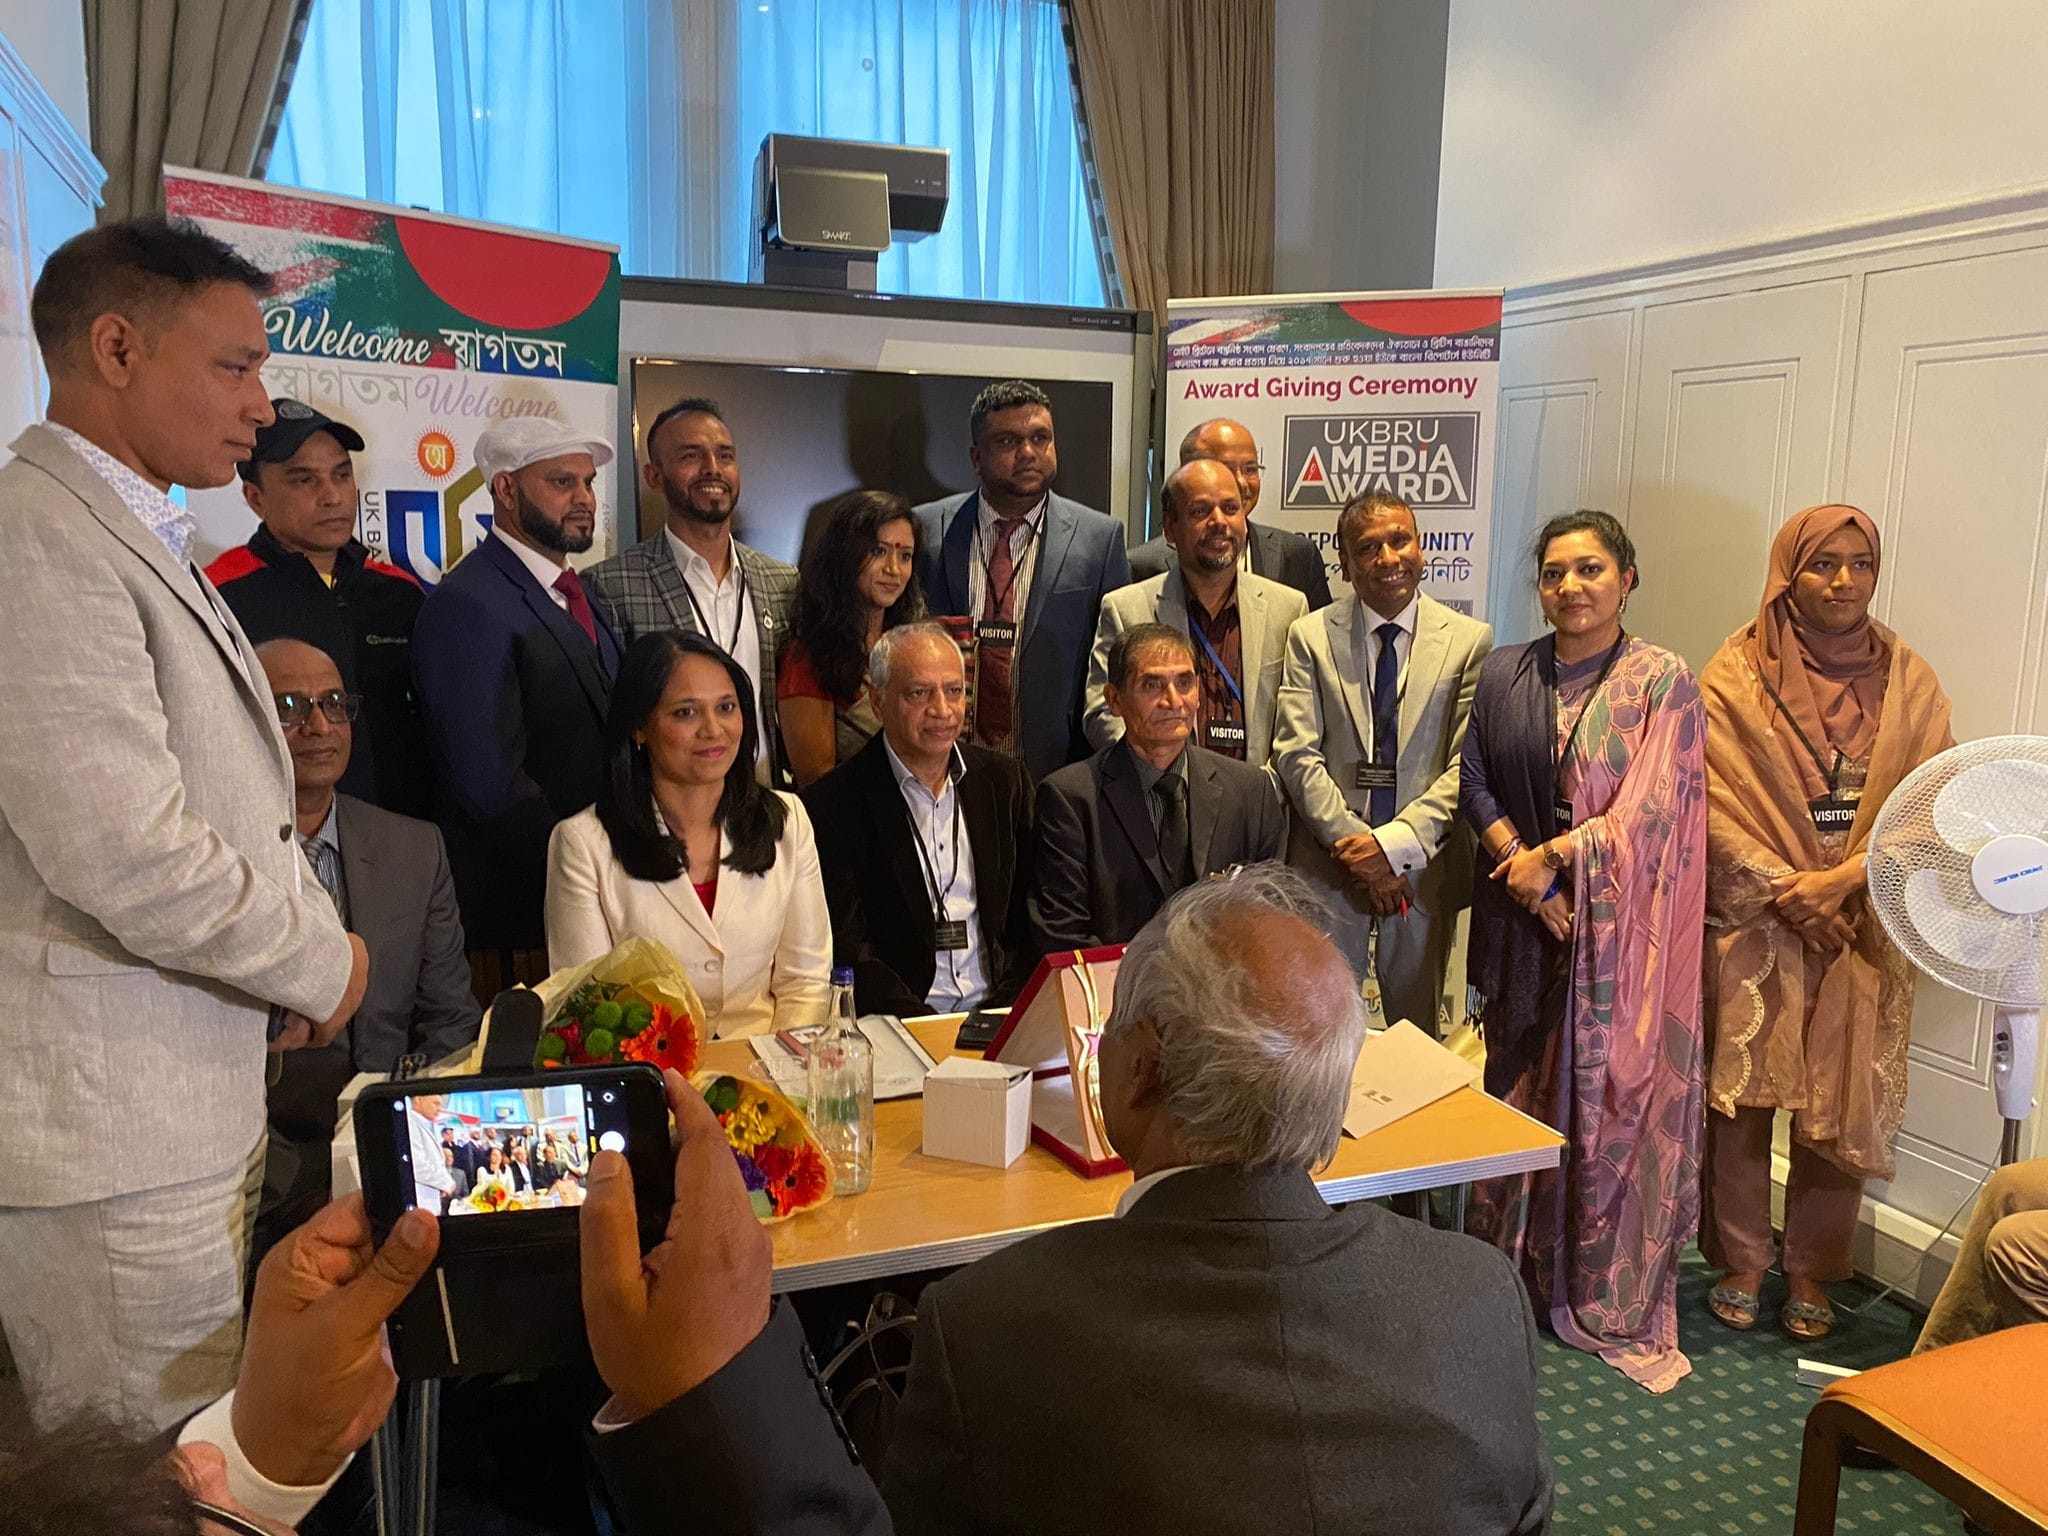 Bangla media journalists working in Britain receive the UKBRU Media Award